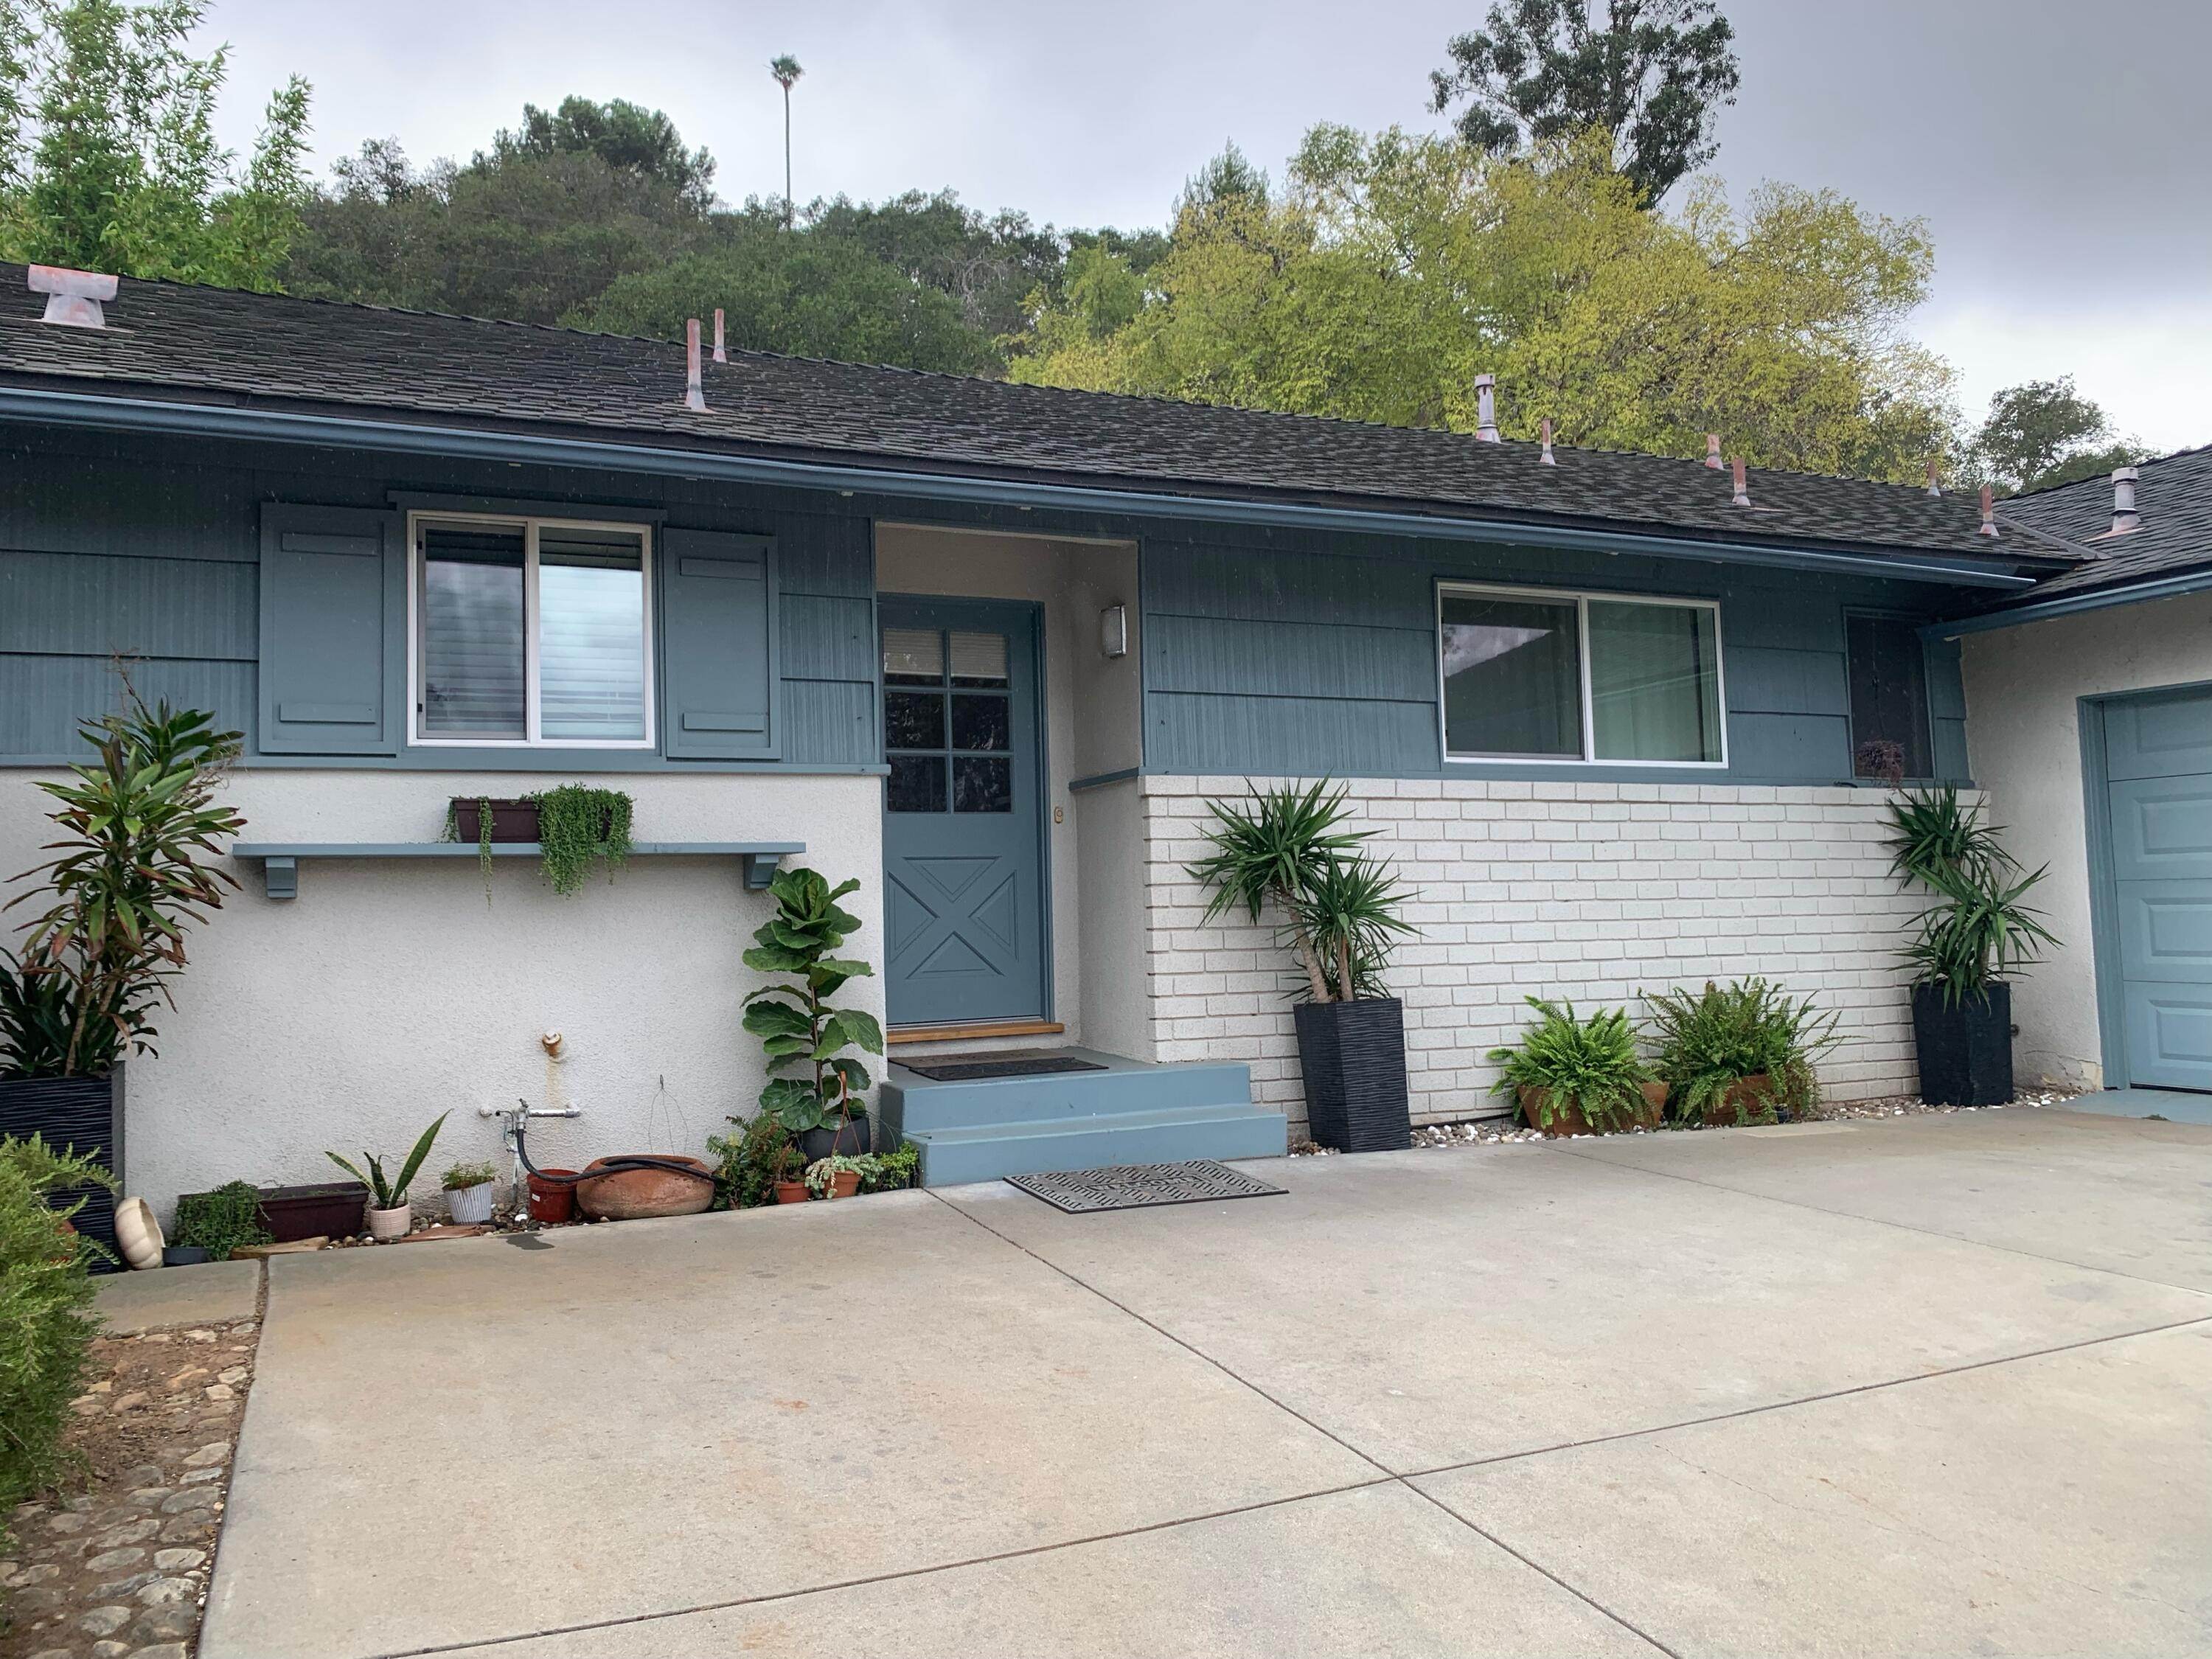 2. Estate at 2523 Hacienda Drive Santa Barbara, California 93105 United States